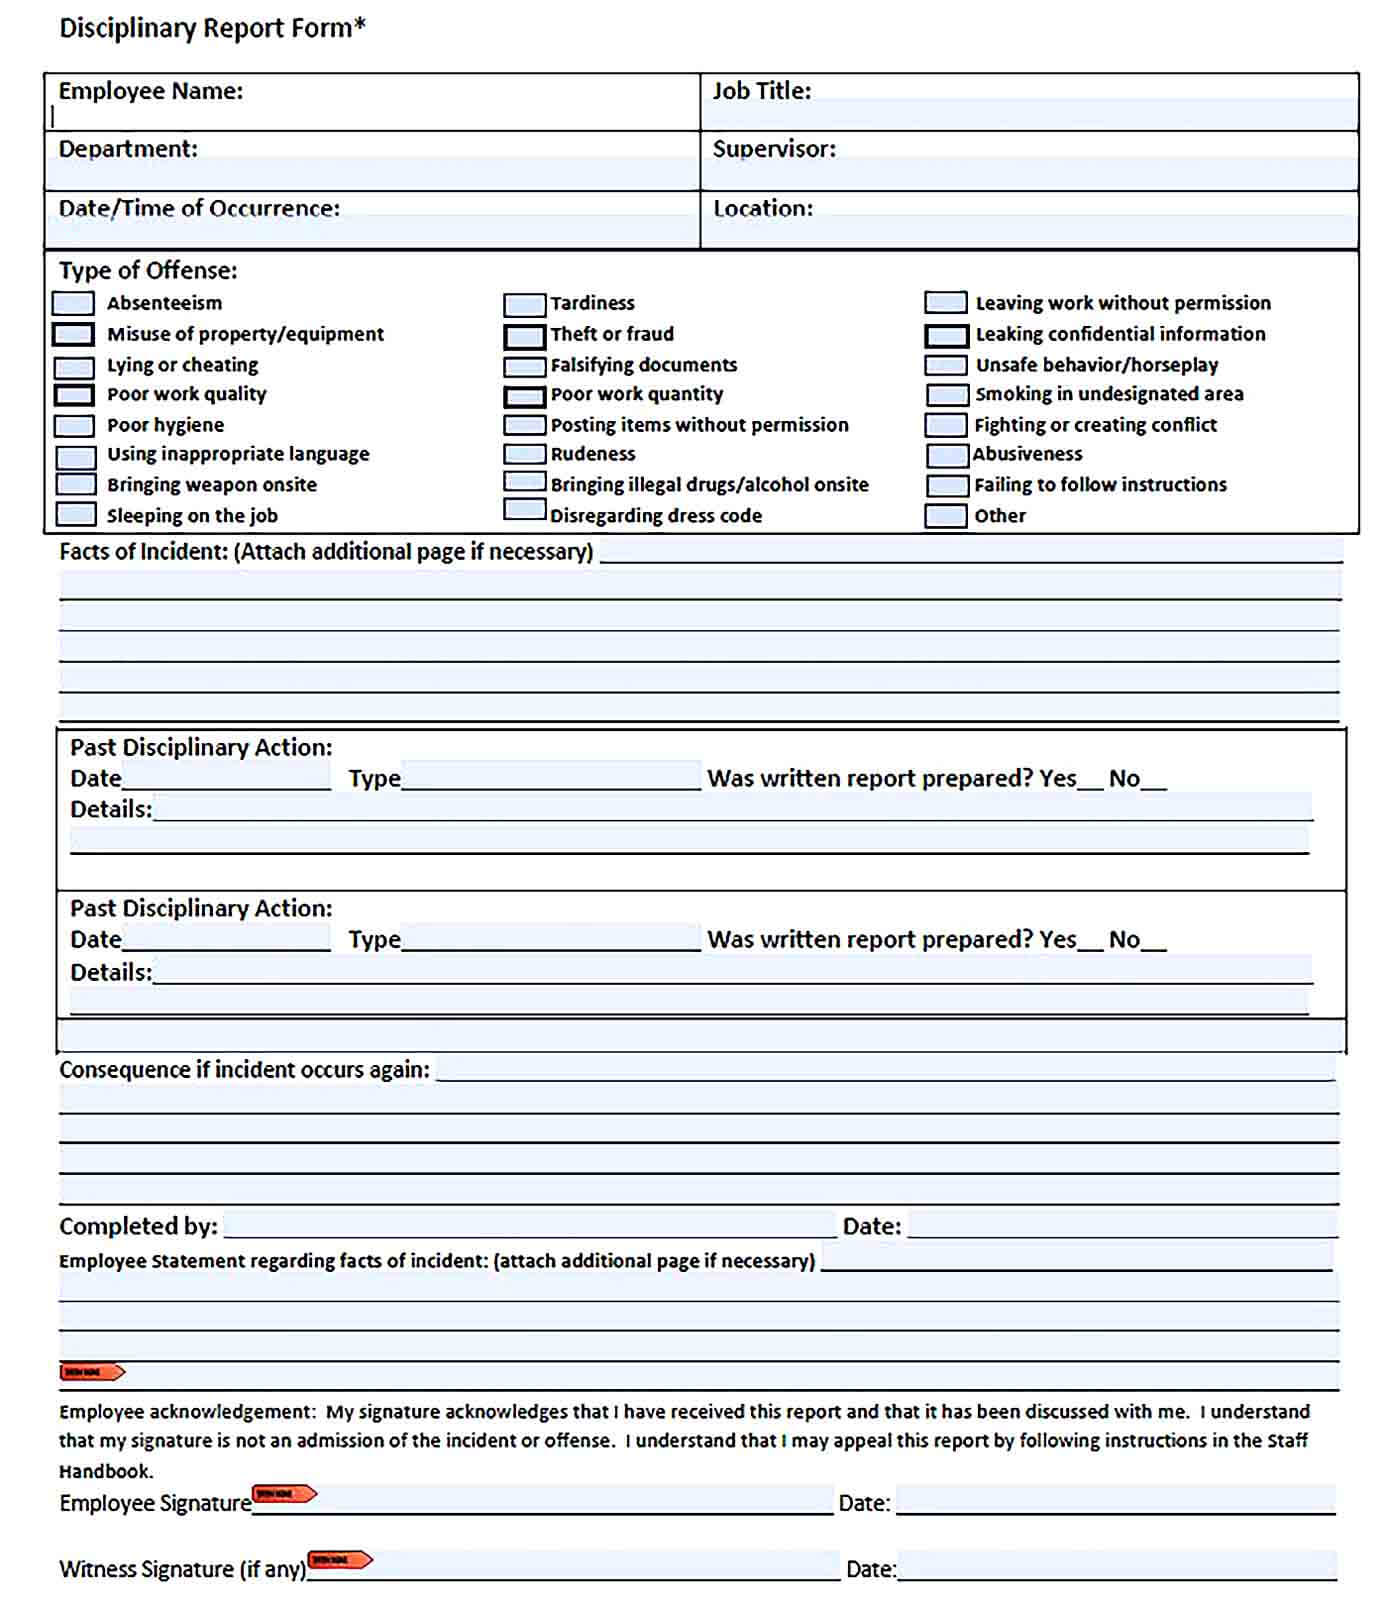 Sample Disciplinary Report Form.